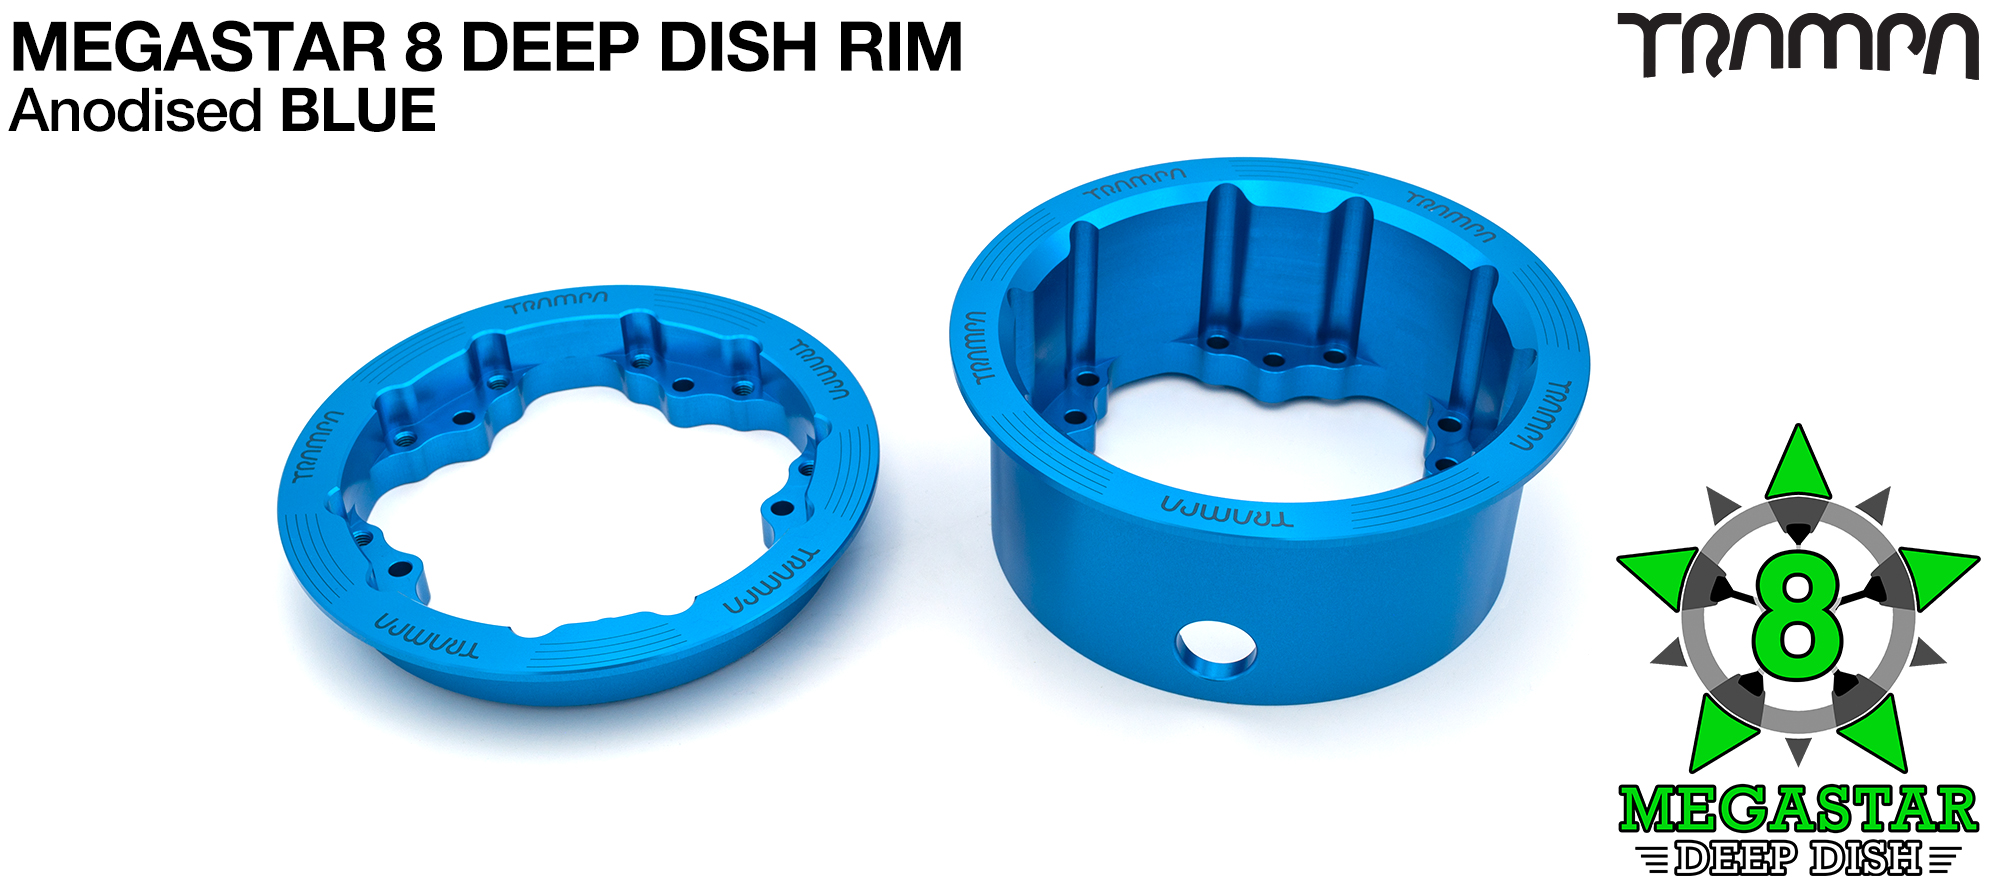 DEEP-DISH MEGASTAR 8 Rims on the FRONT - BLUE 